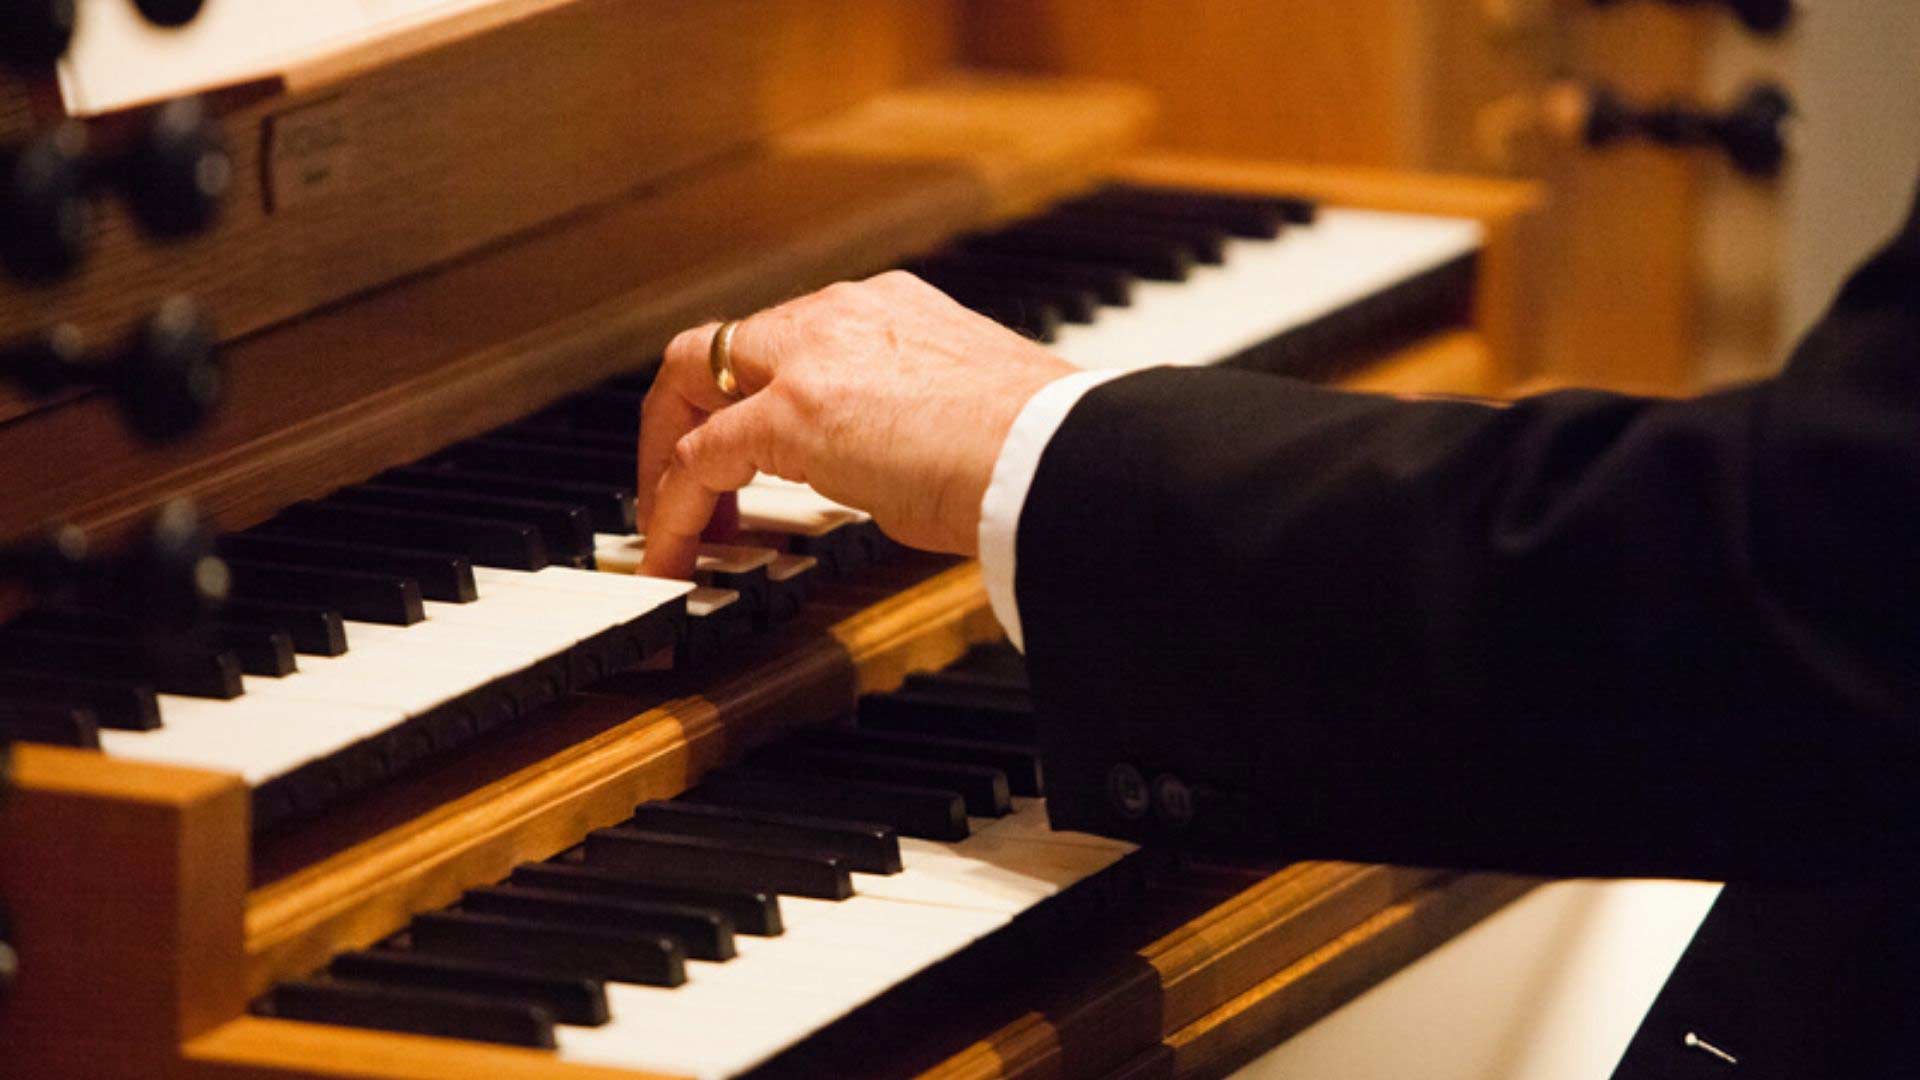 Close-up of a hand playing an organ.